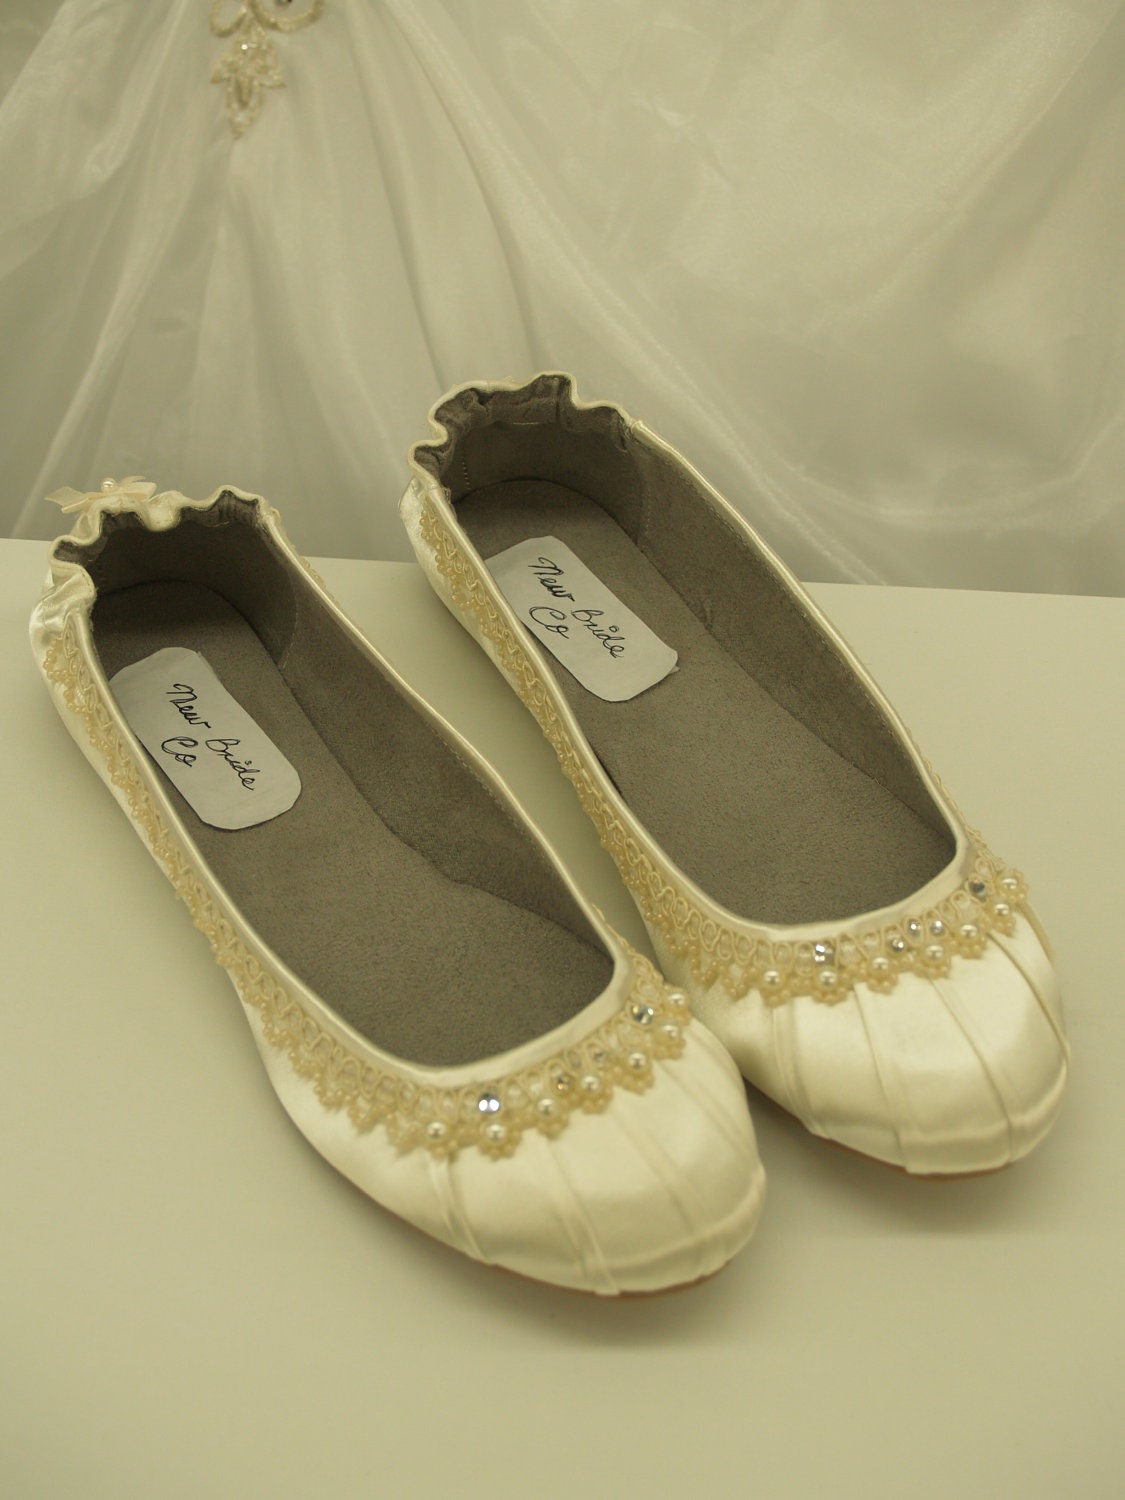 Ivory Wedding Flats Fancy Shoes by NewBrideCo on Etsy